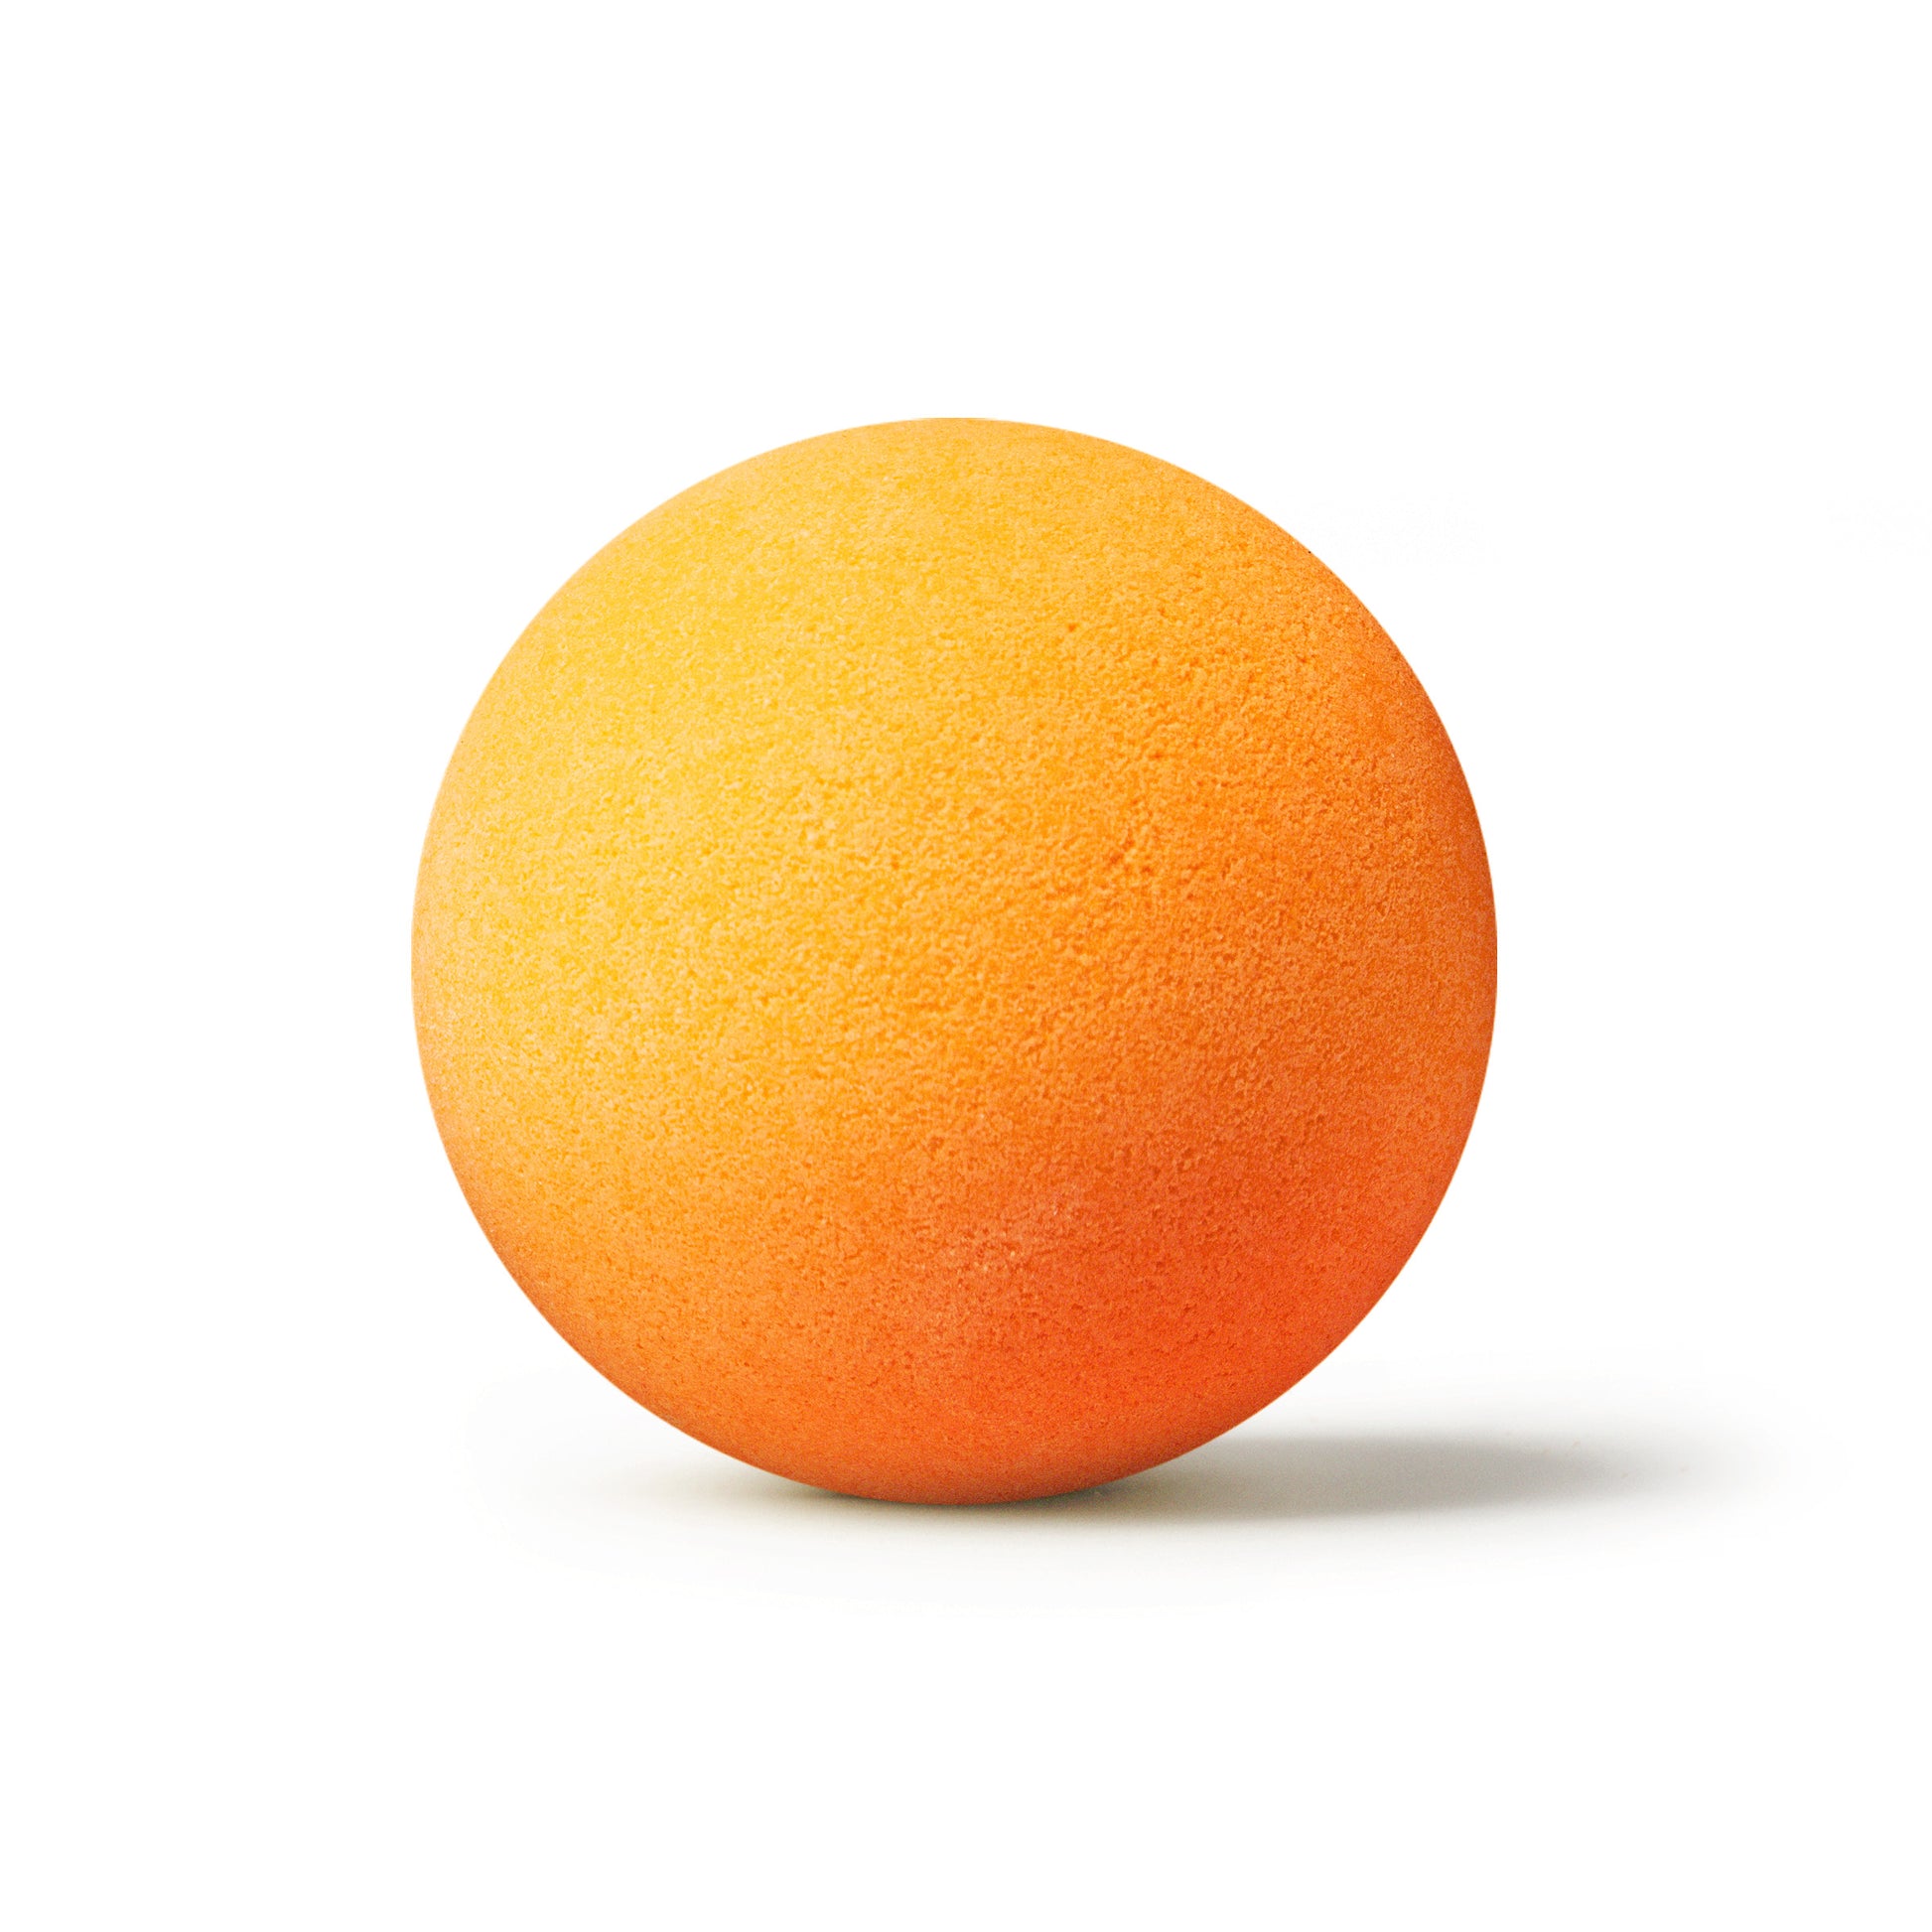 an orange bath bomb with shadow